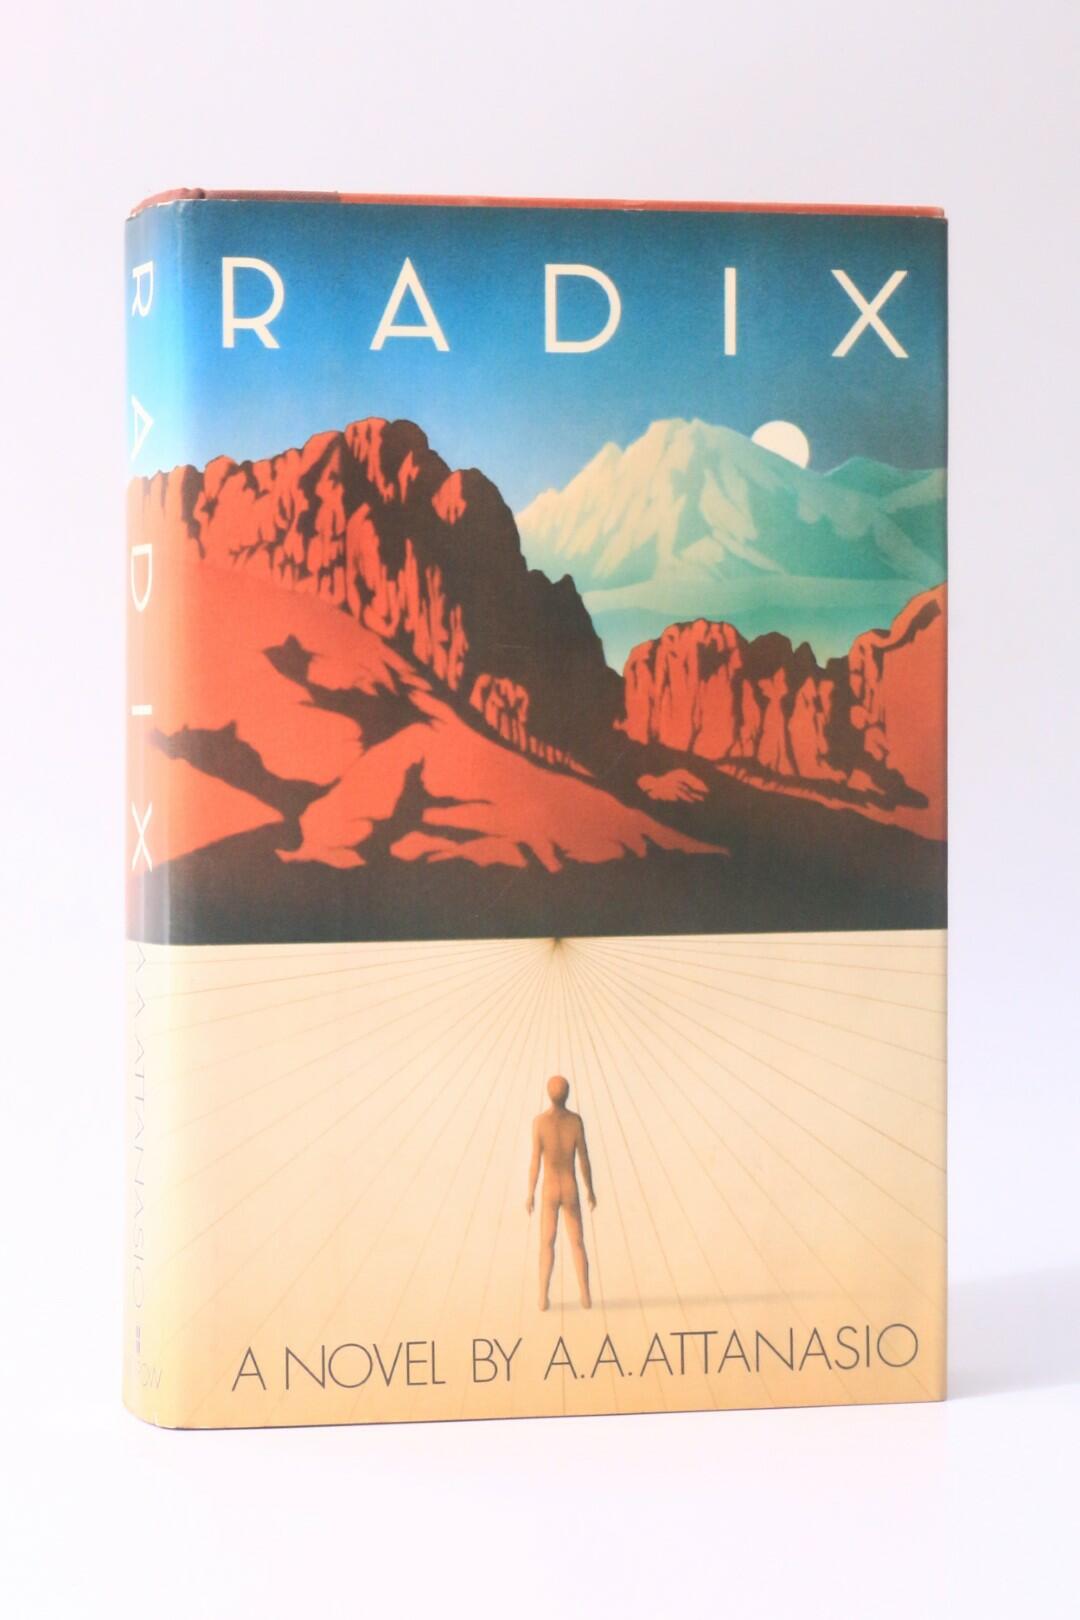 A.A. Attanasio - Radix - Morrow, 1981, First Edition.